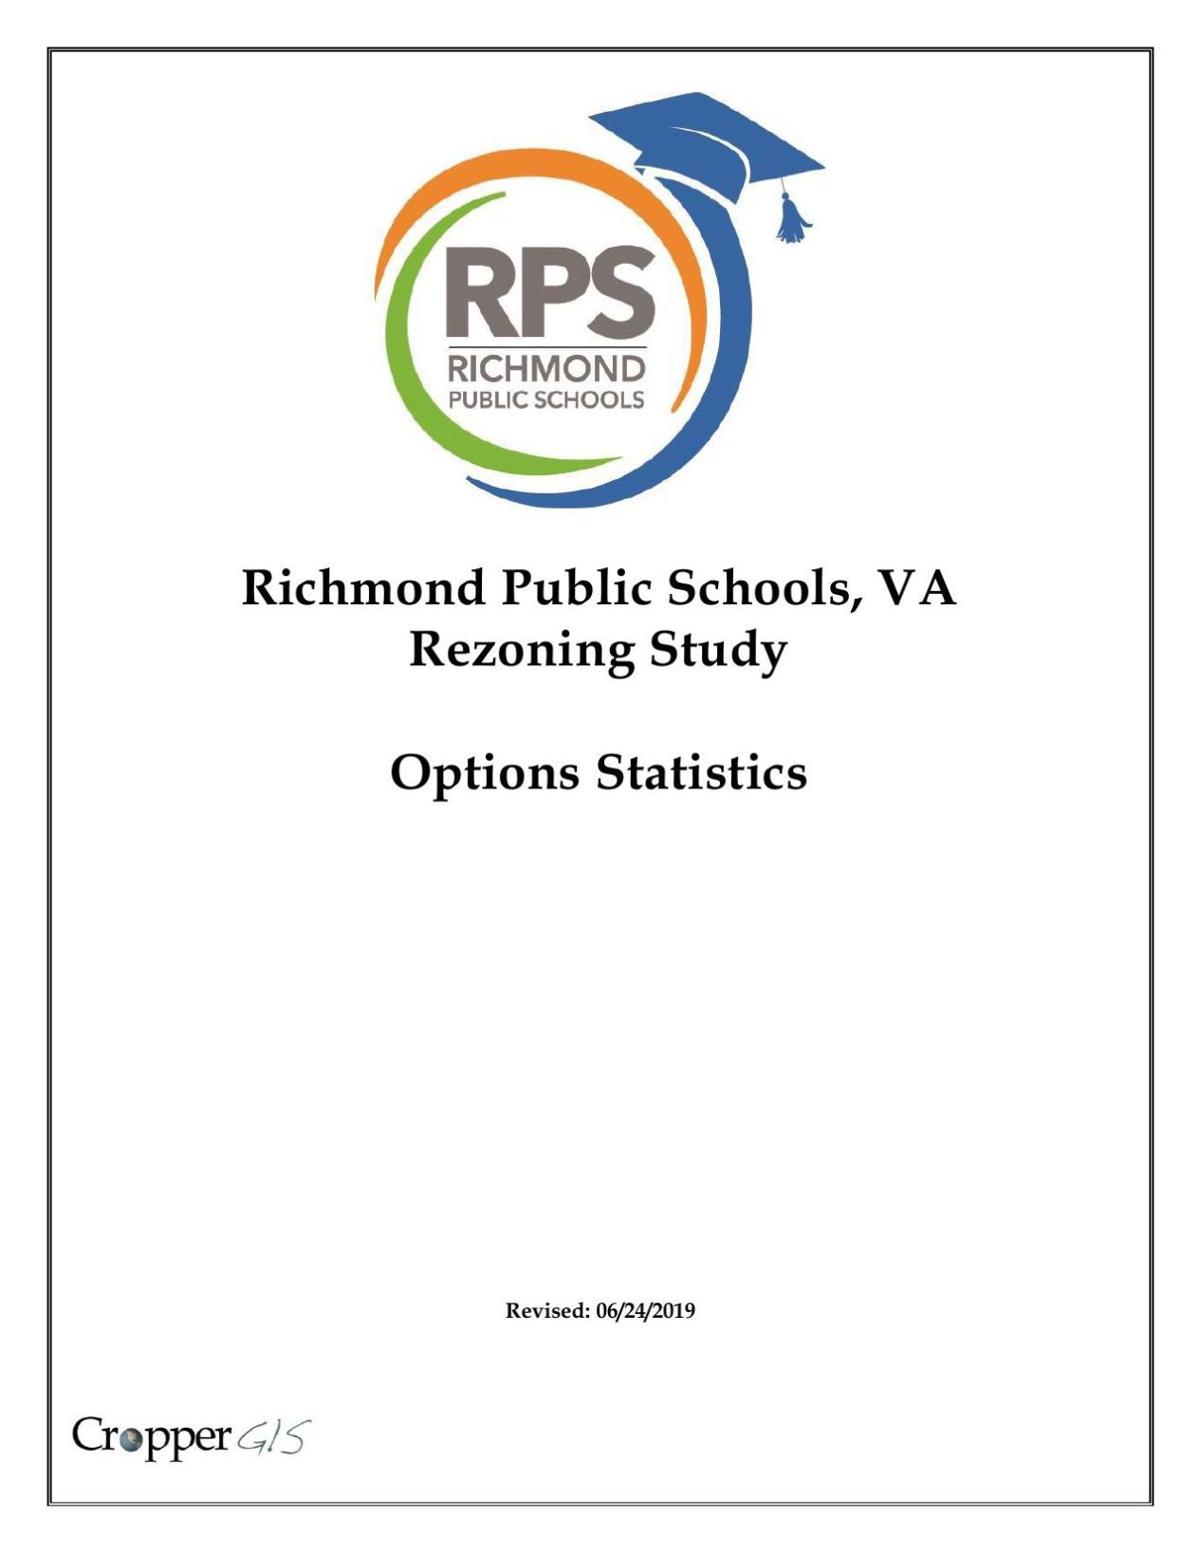 Richmond Public Schools New Zones Overview